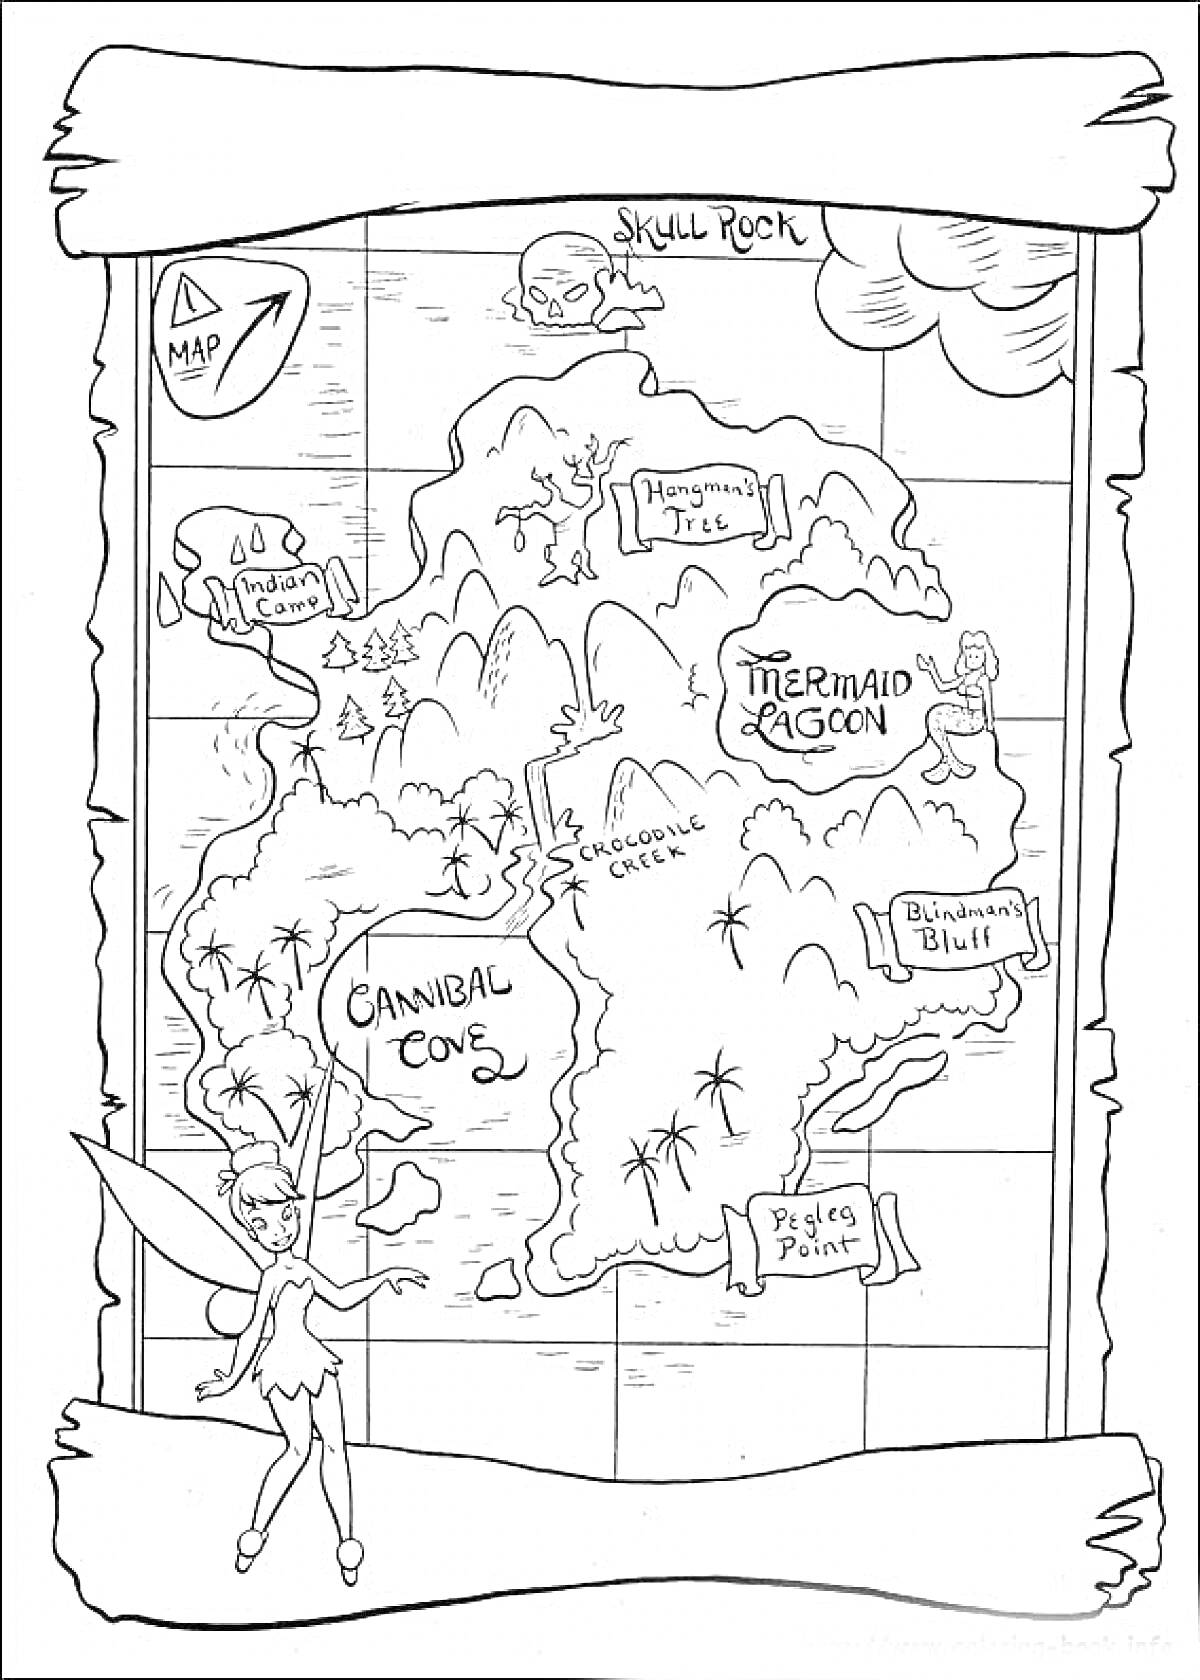 Раскраска Карта Сокровищ с обозначенными локациями (Skull Rock, Hangman's Tree, Cannibal Cove, Mermaid Lagoon, Blackbeard's Bluff, Pistol's Point) и персонажем (волшебница) в левом нижнем углу